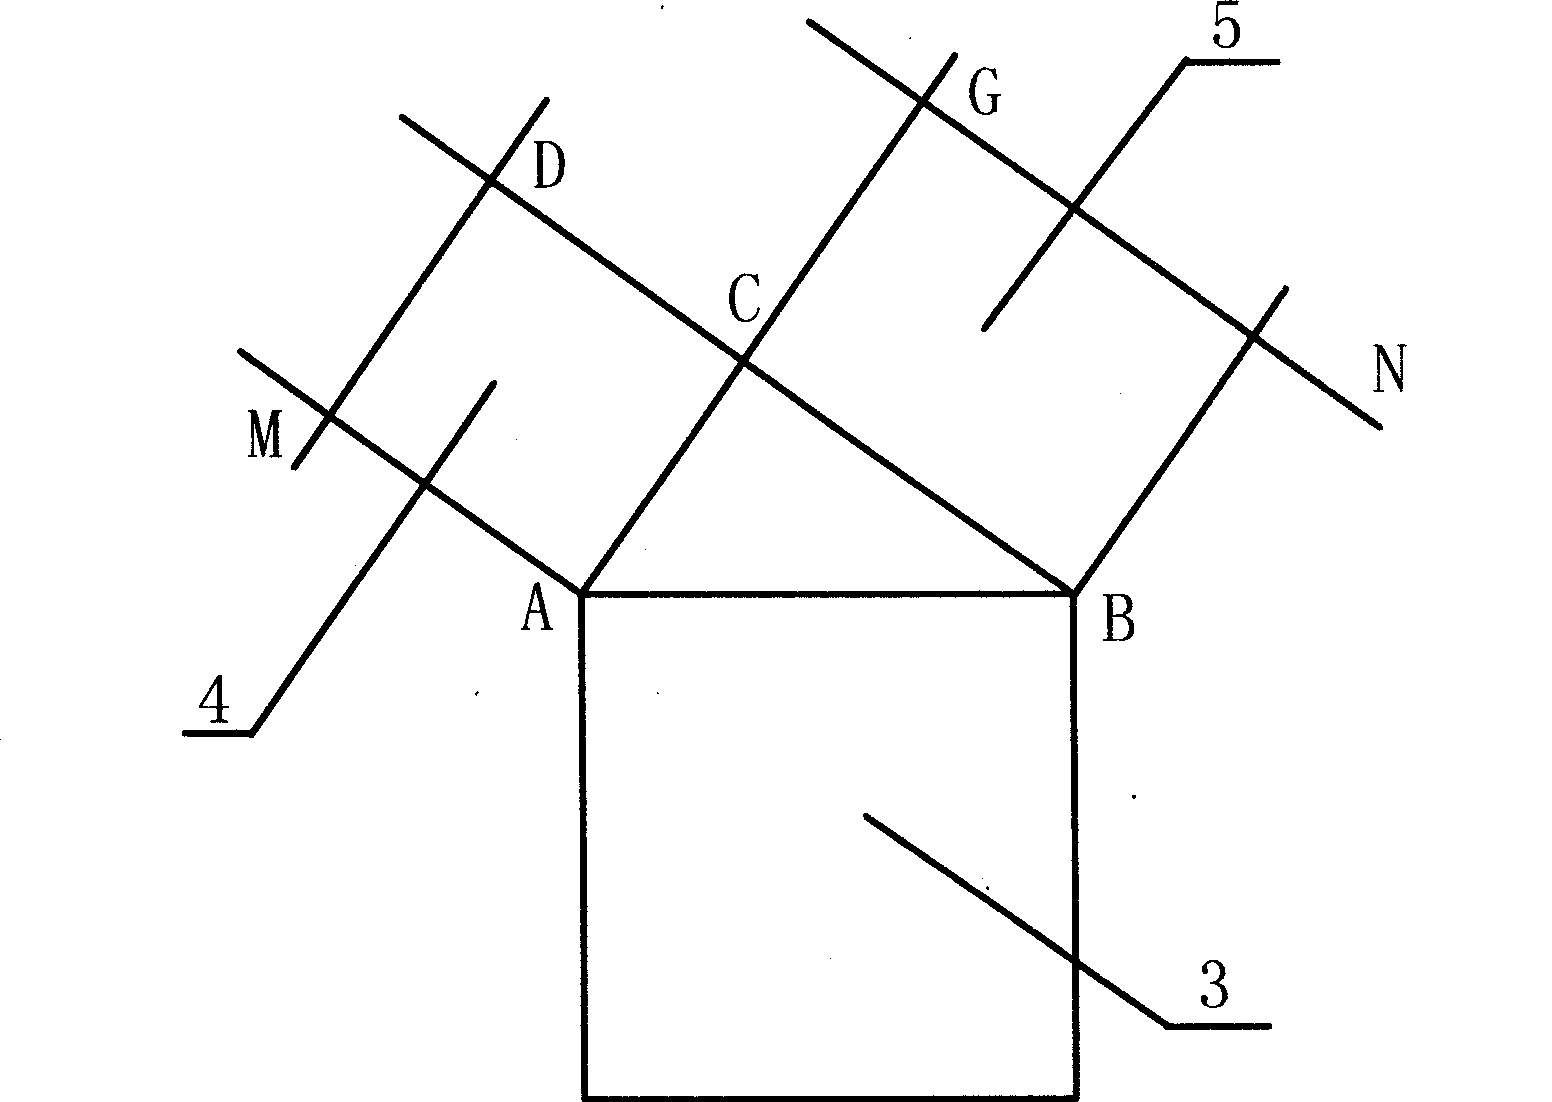 Popular science experimental method for checking pythagorean proposition